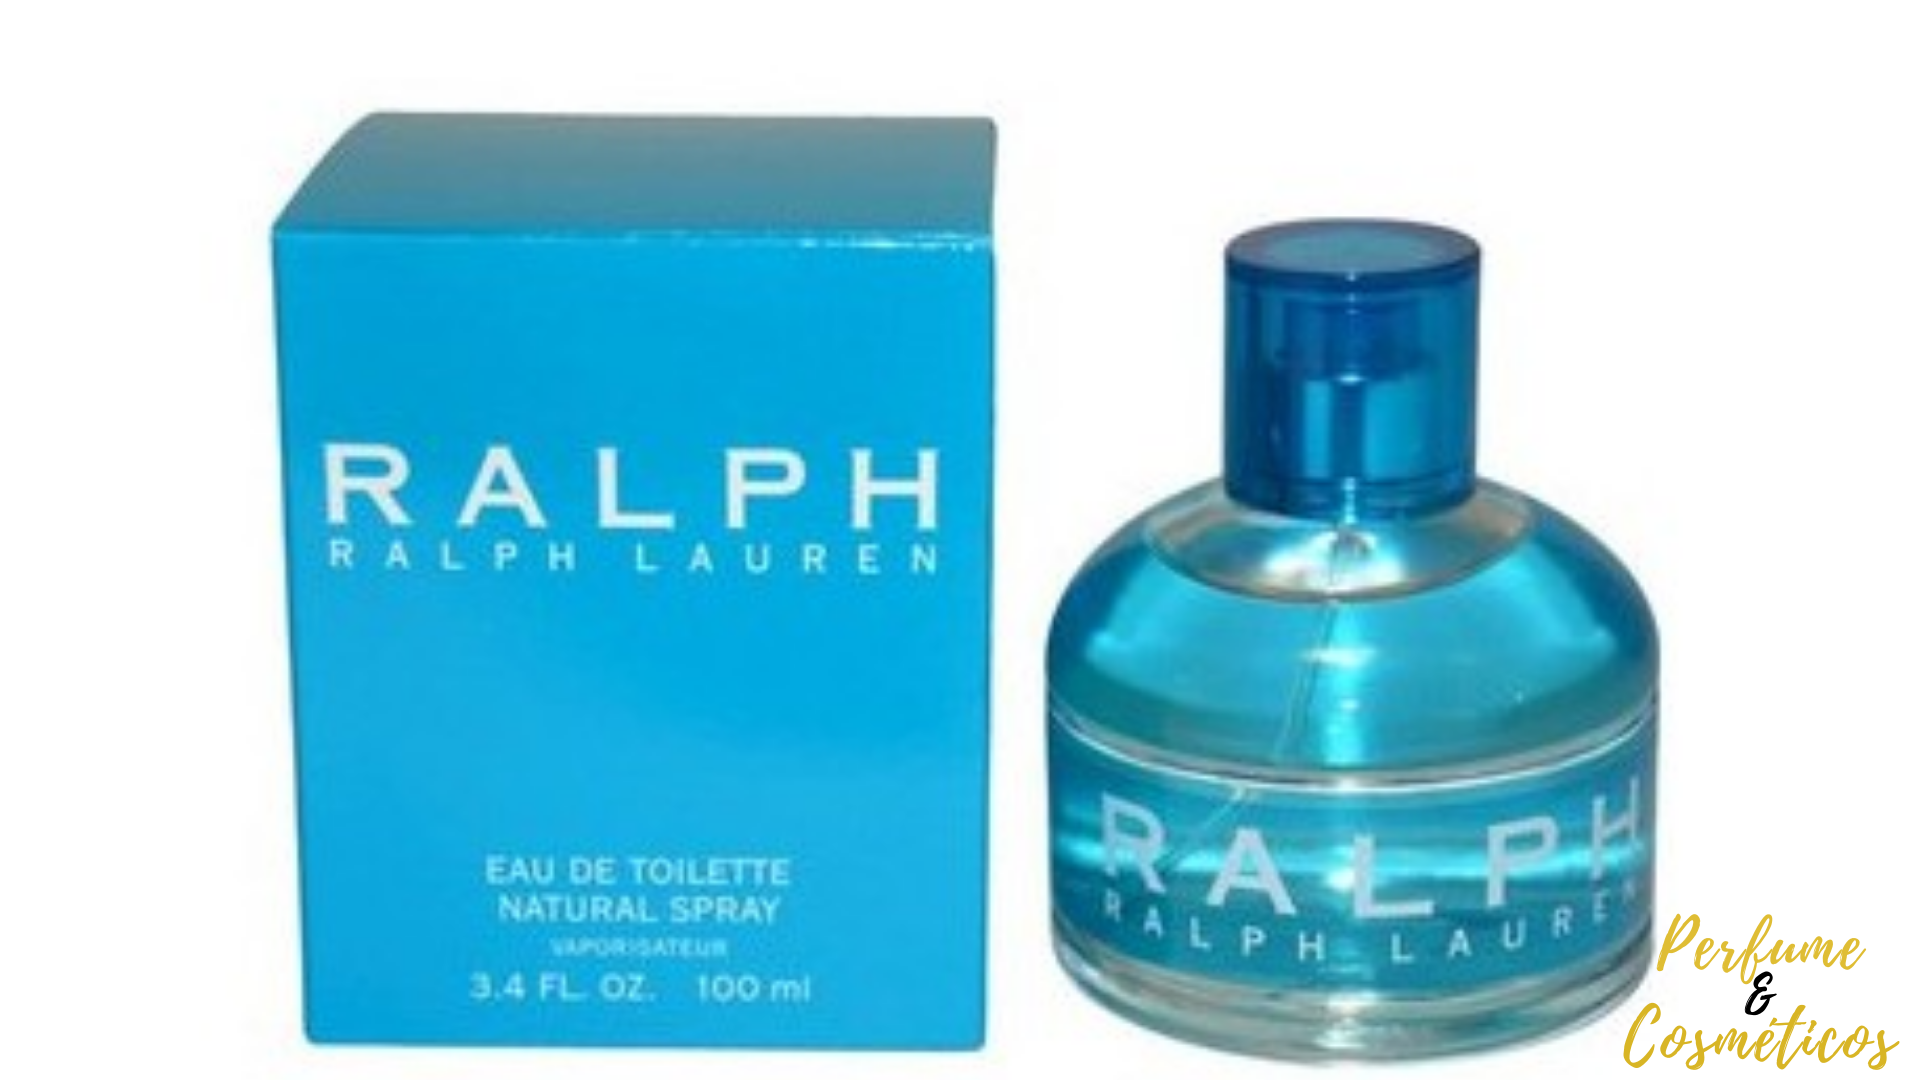 Perfume Importado: Perfume Importado Ralph Lauren